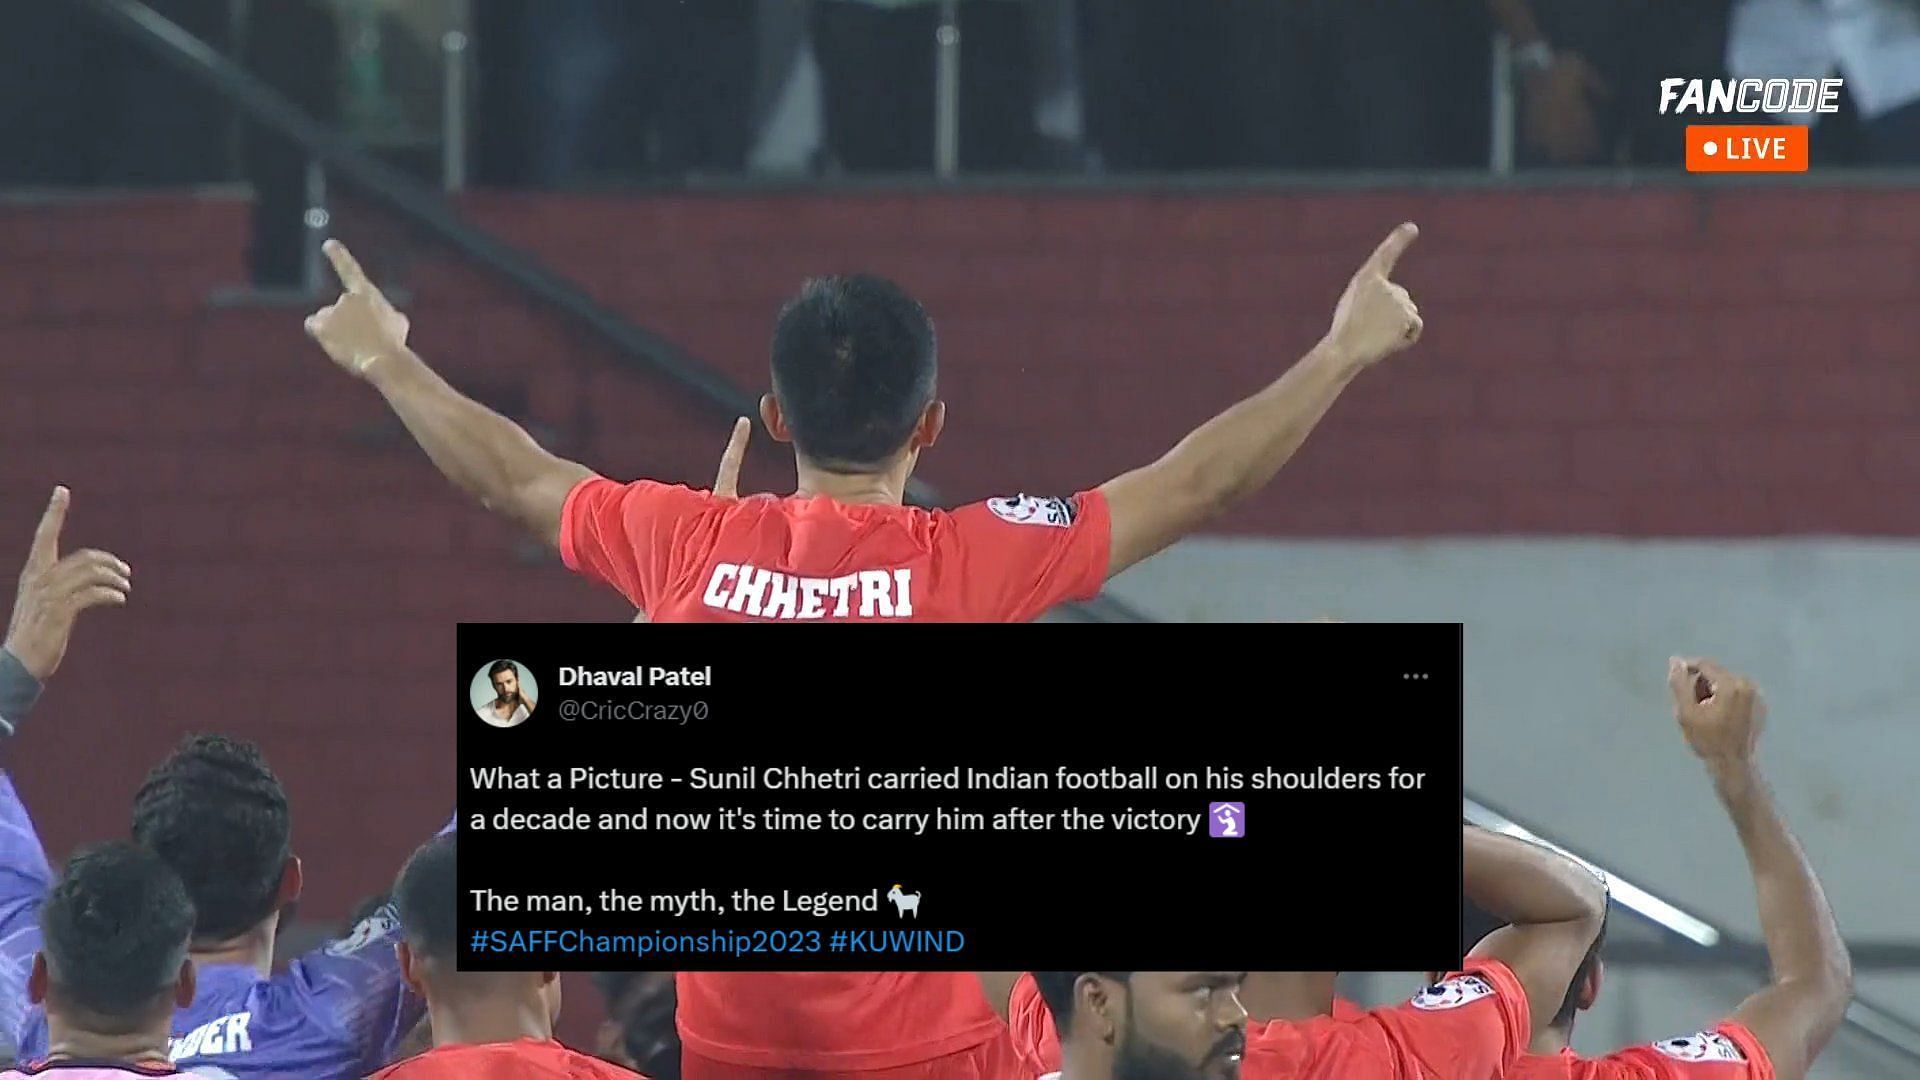 Sunil Chhetri led India to a record 9th SAFF Championship win on Tuesday night at the Sree Kanteerava Stadium. (Image: Twitter/FanCode)